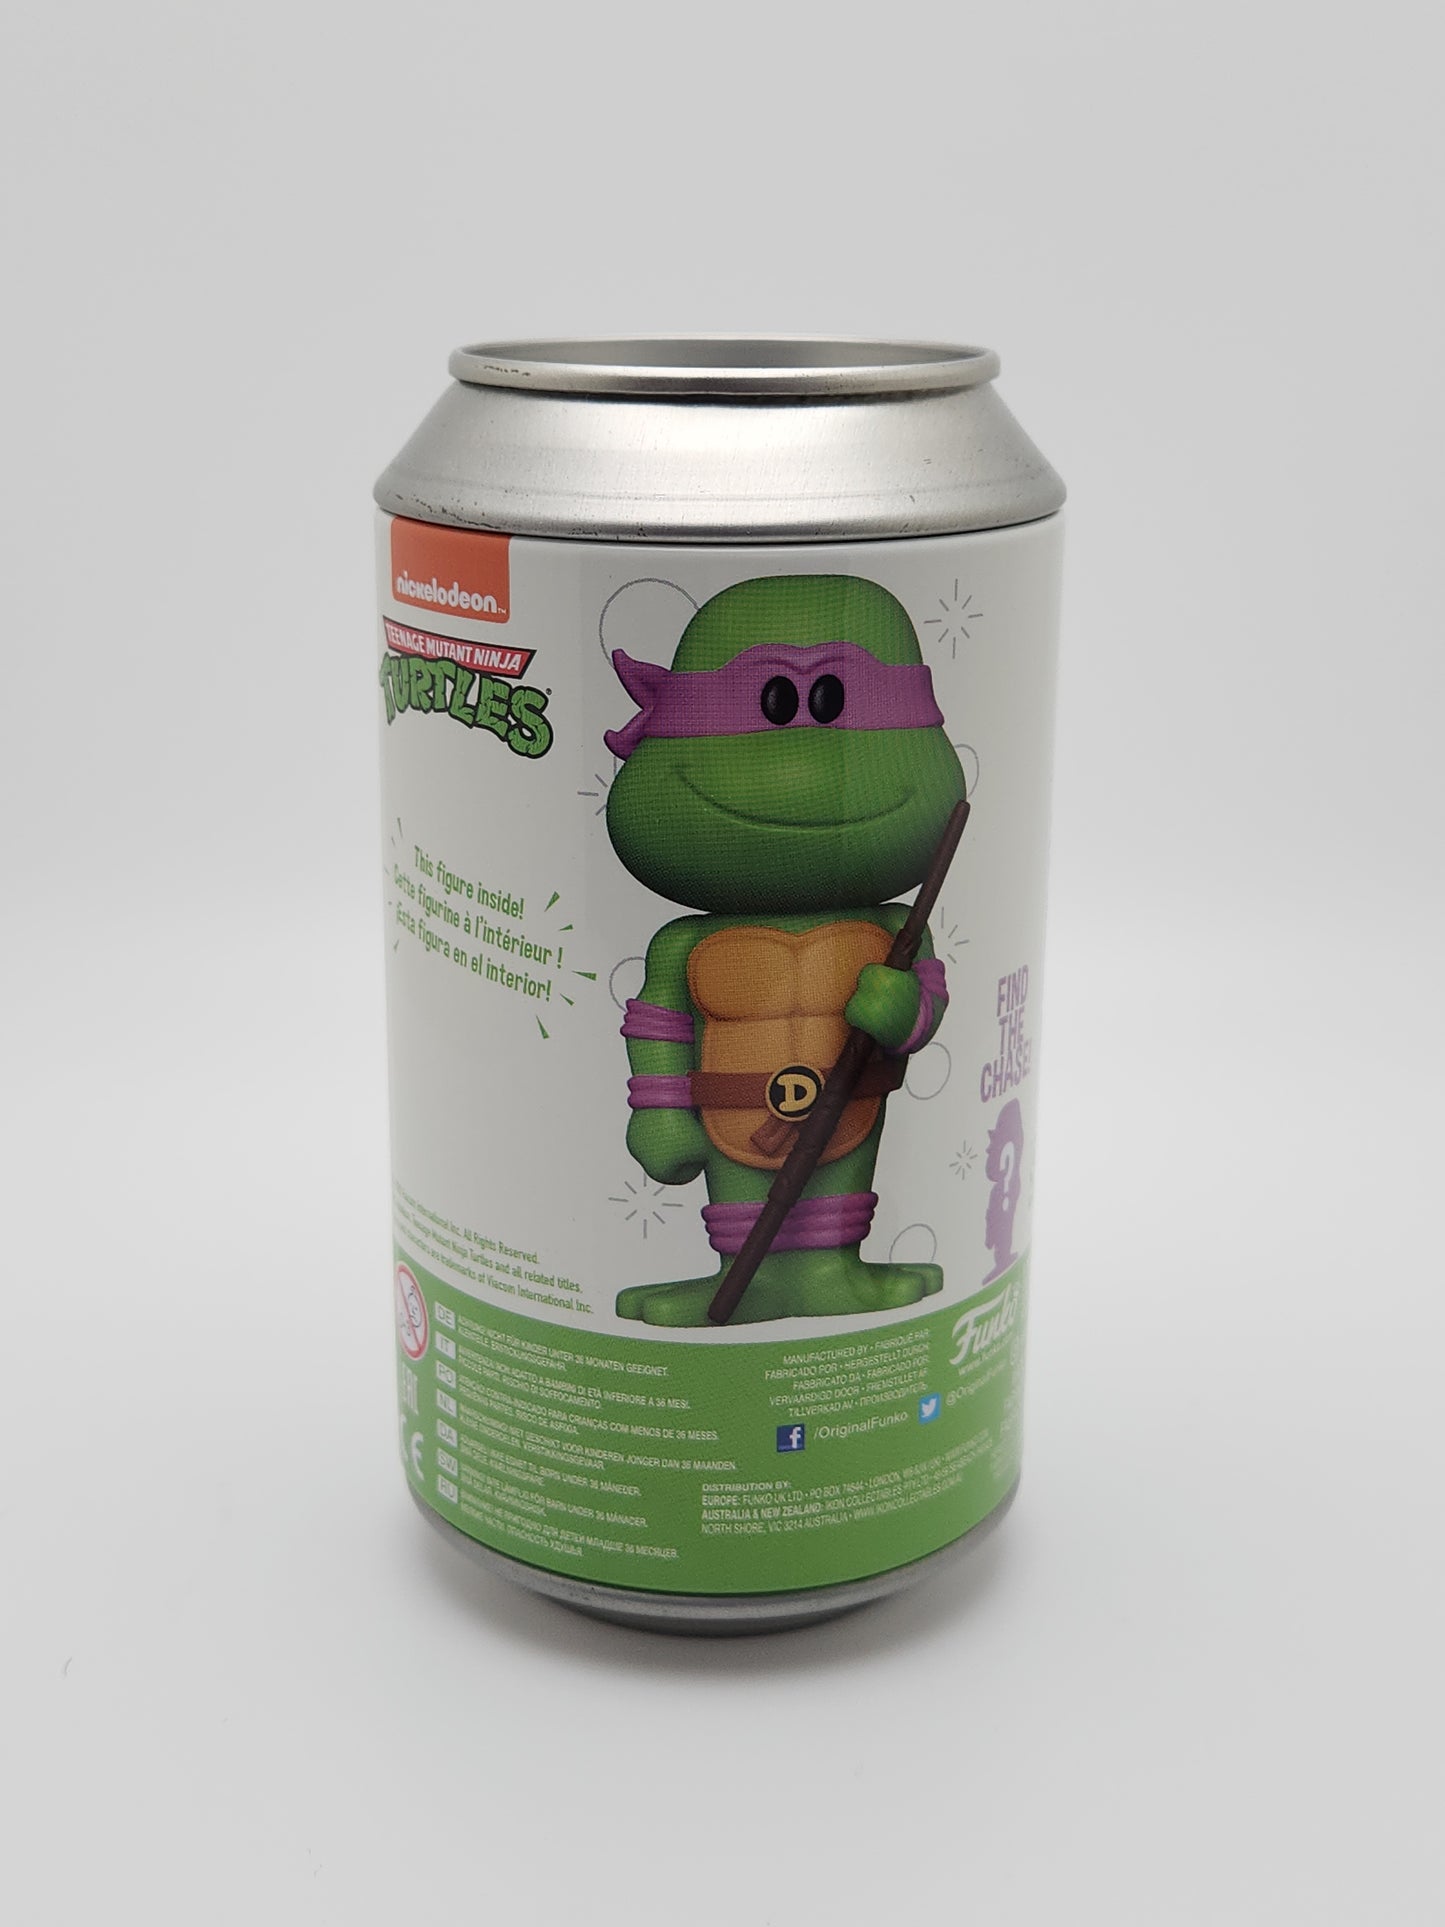 Funko Soda- Donatello